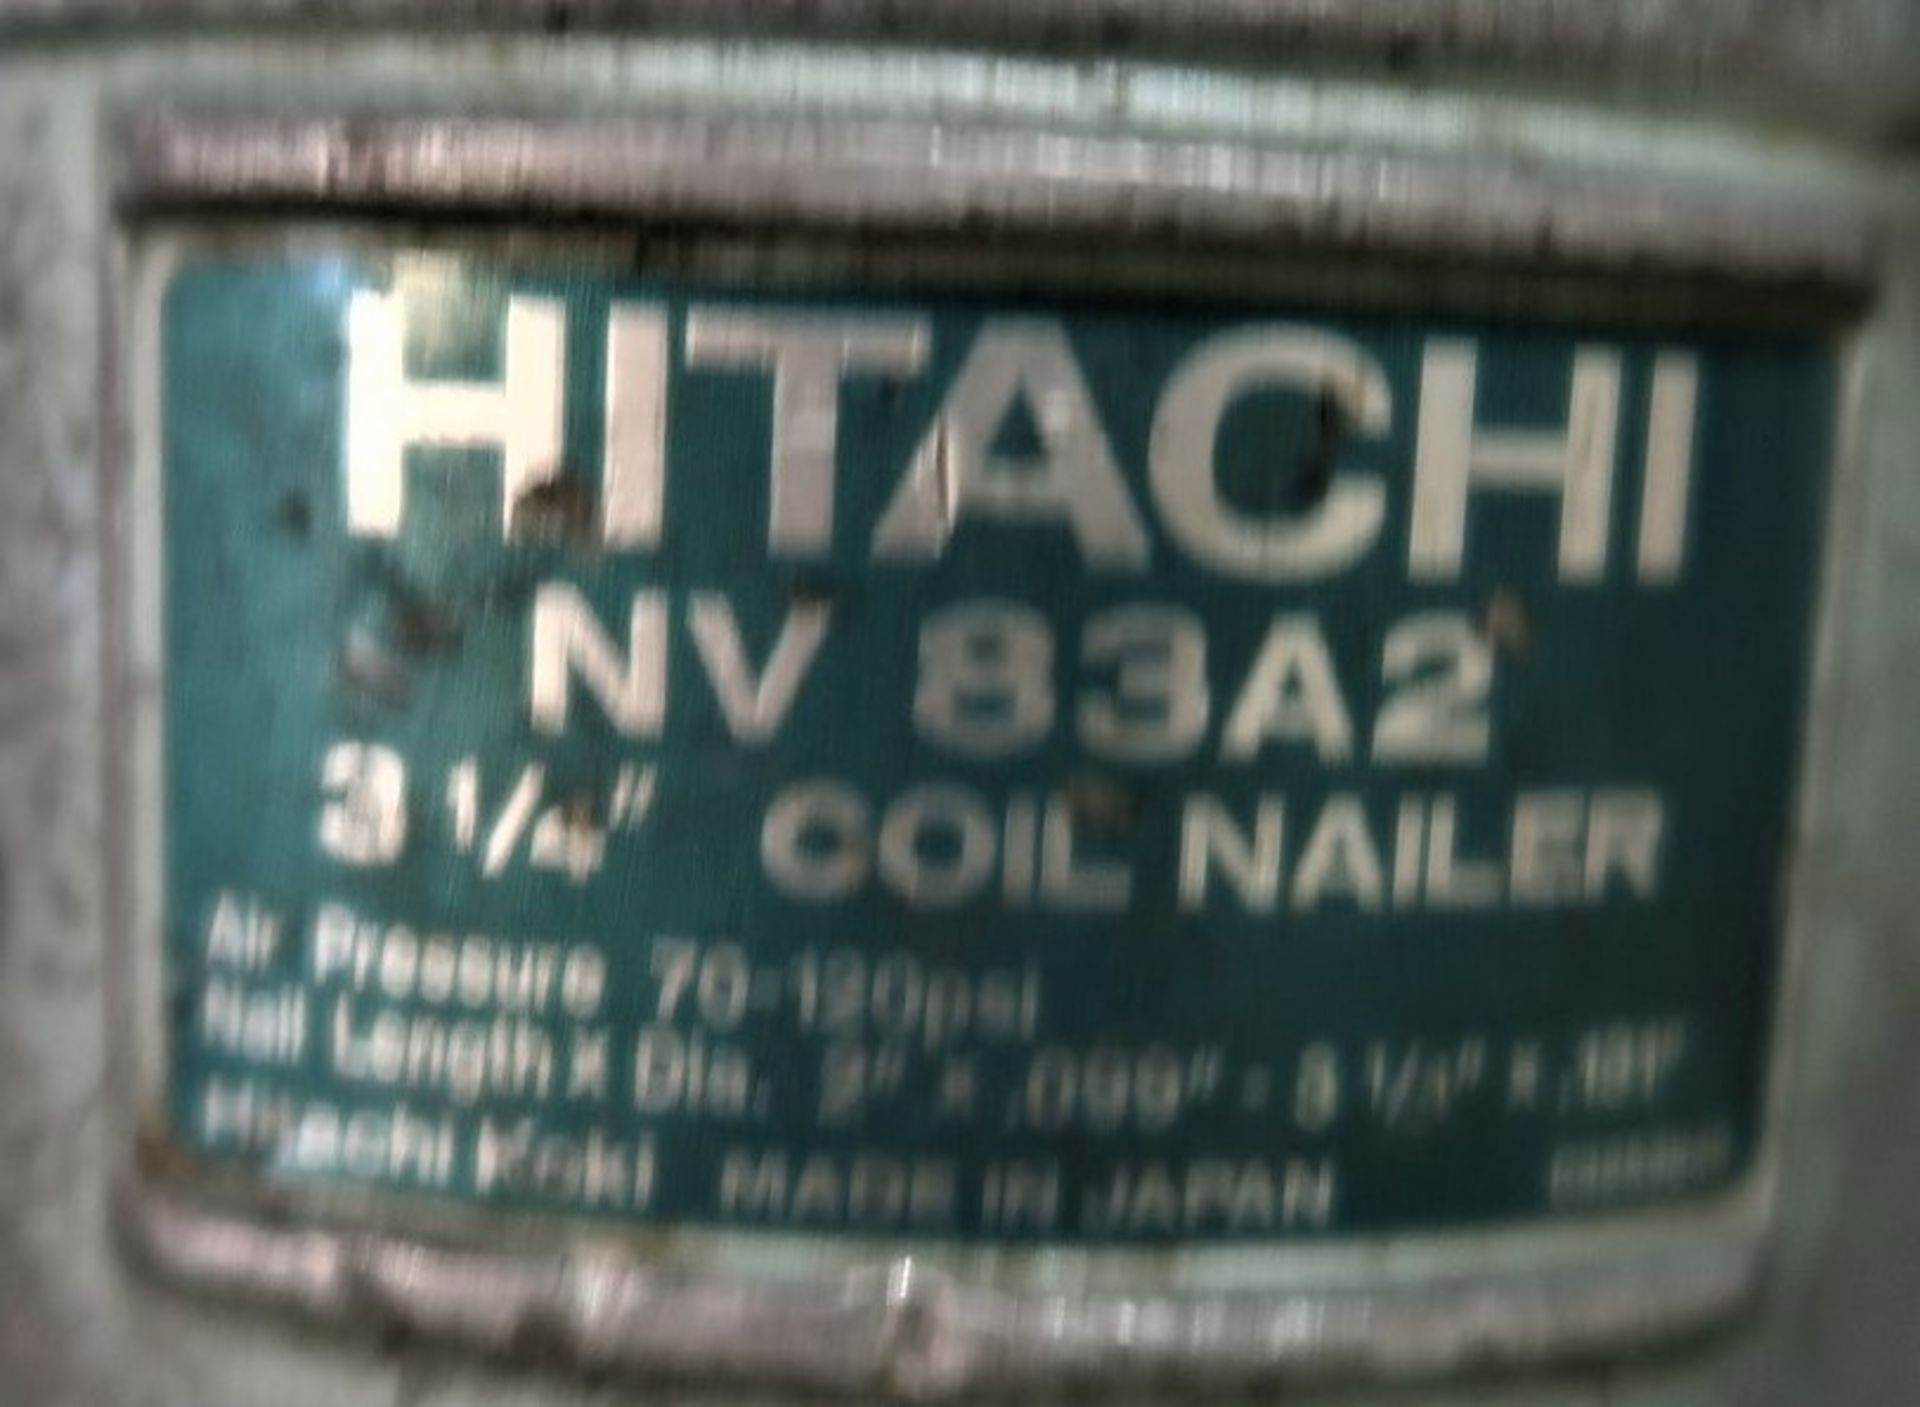 HITACHI NV 83A2 3 1/4 IN. COIL NAILER - Image 2 of 2